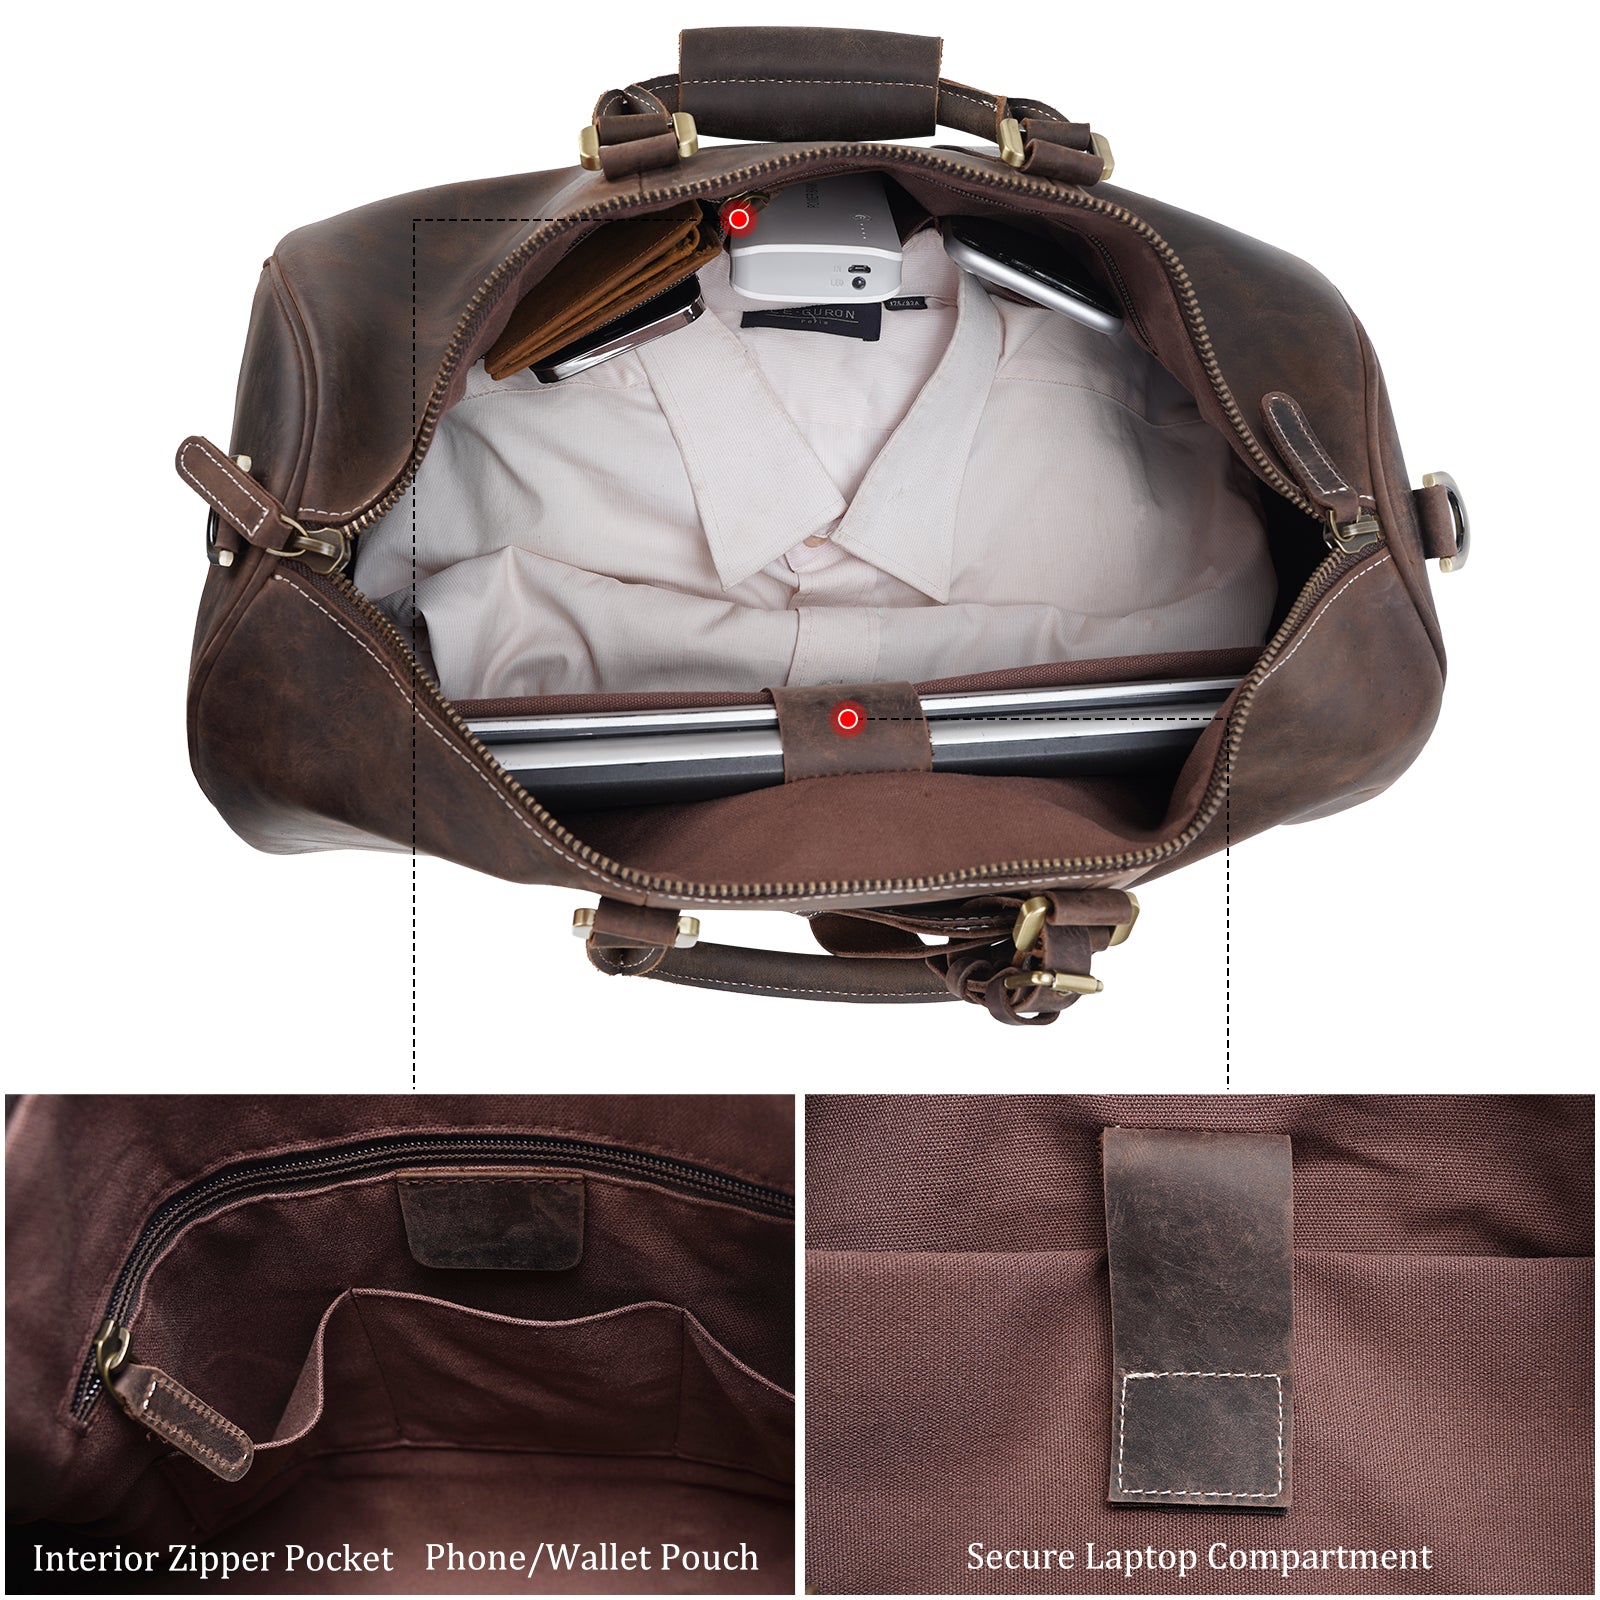 Polare 20" Ambassador Style Retro Weekender Bag (Inside)